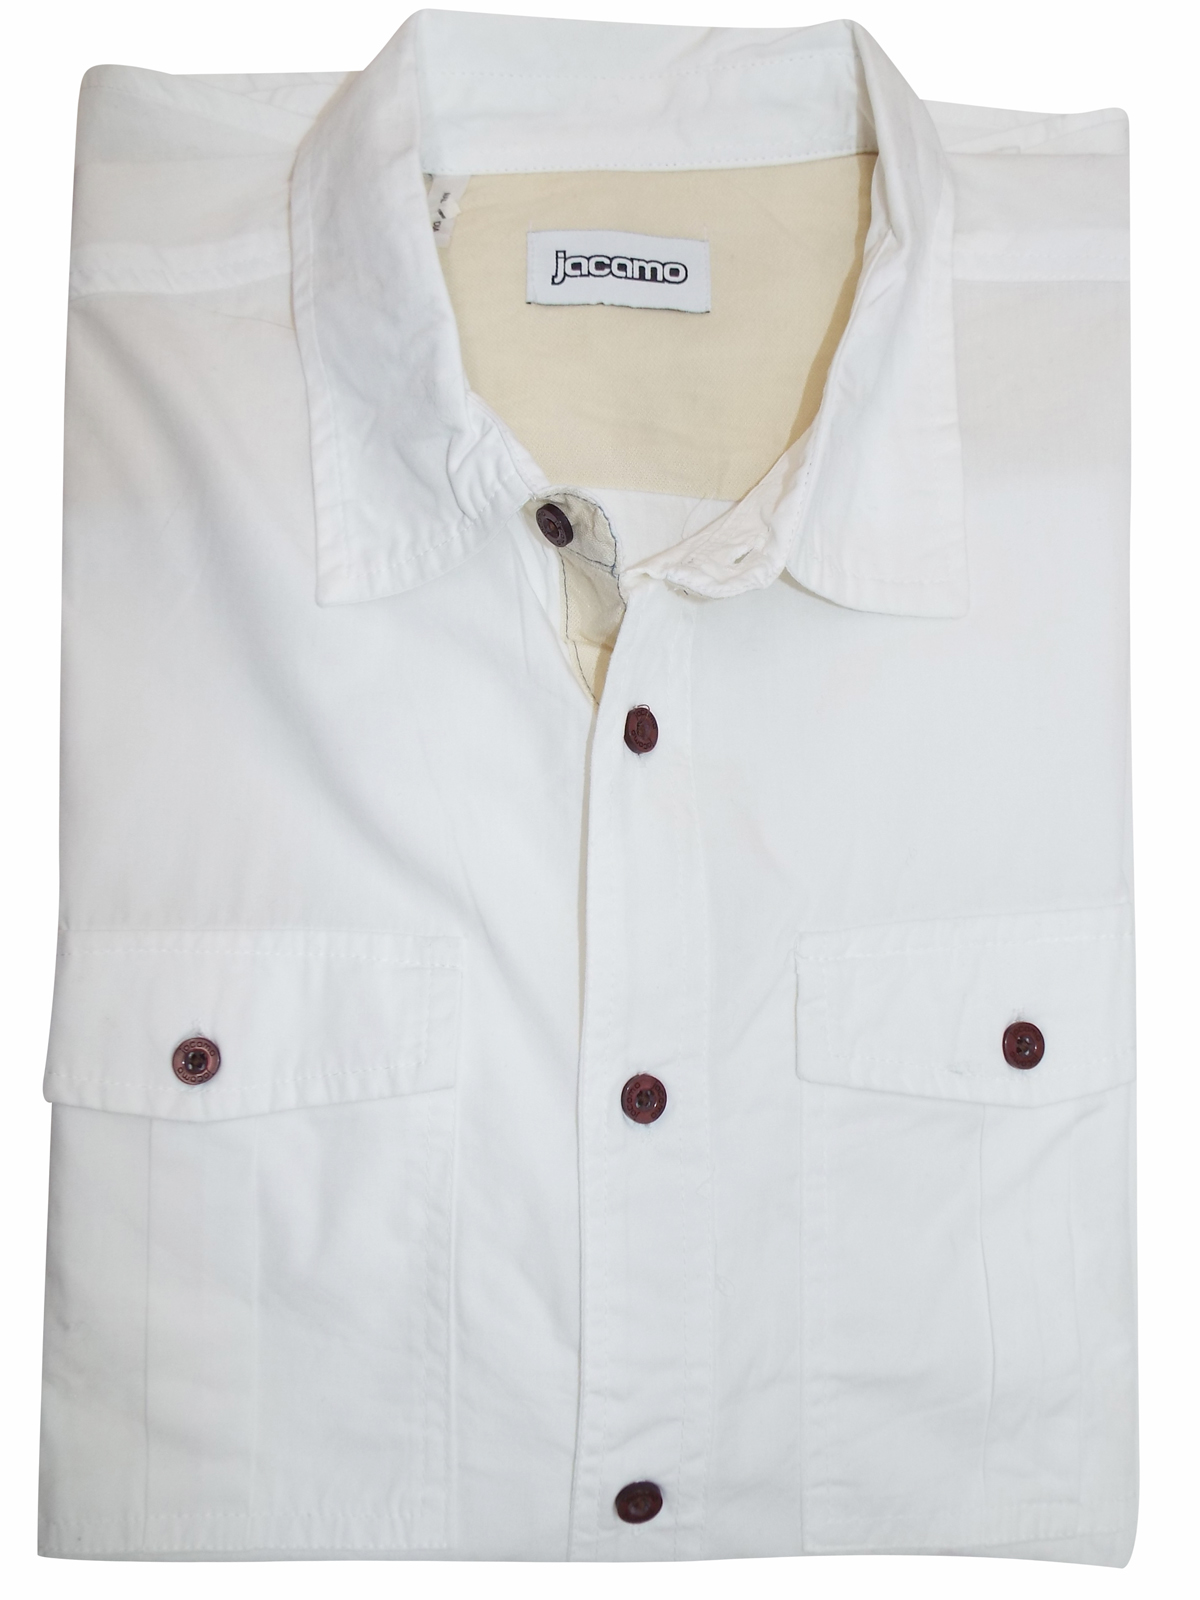 Jacamo - - Jacamo WHITE Mens Pure Cotton Military Shirt - Size Large to 3XL